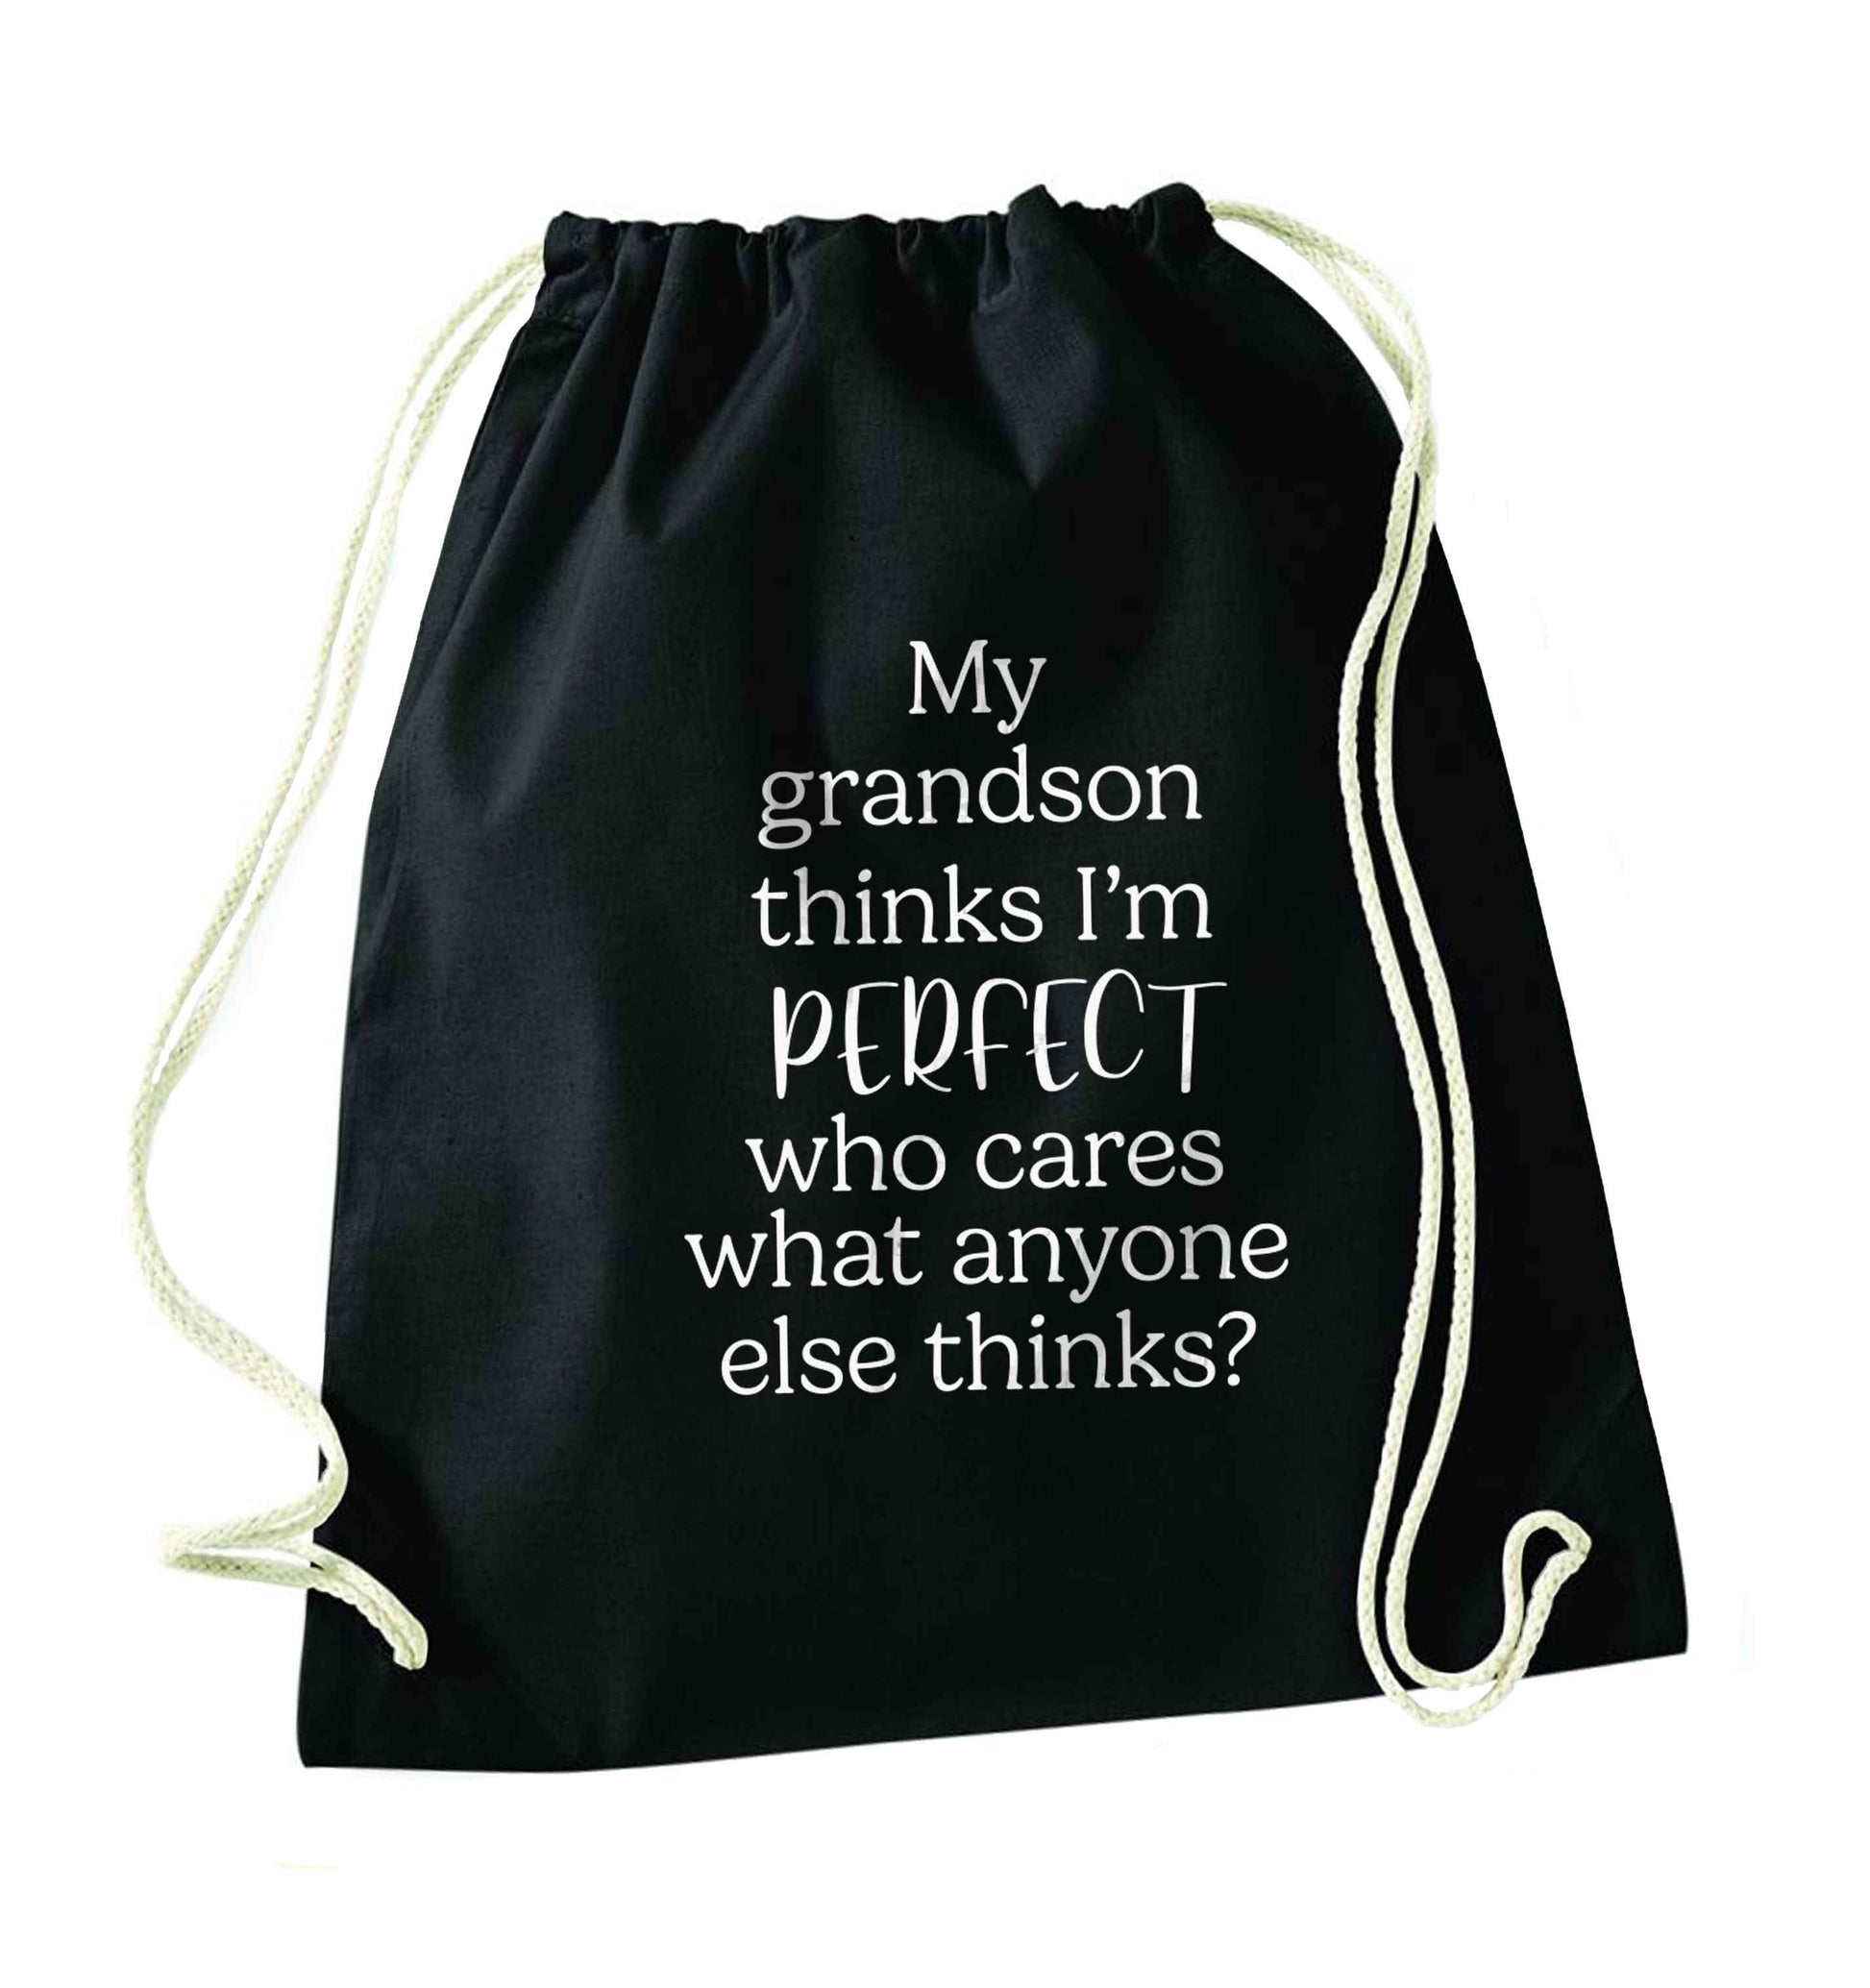 My Grandson thinks I'm perfect who cares what anyone else thinks? black drawstring bag